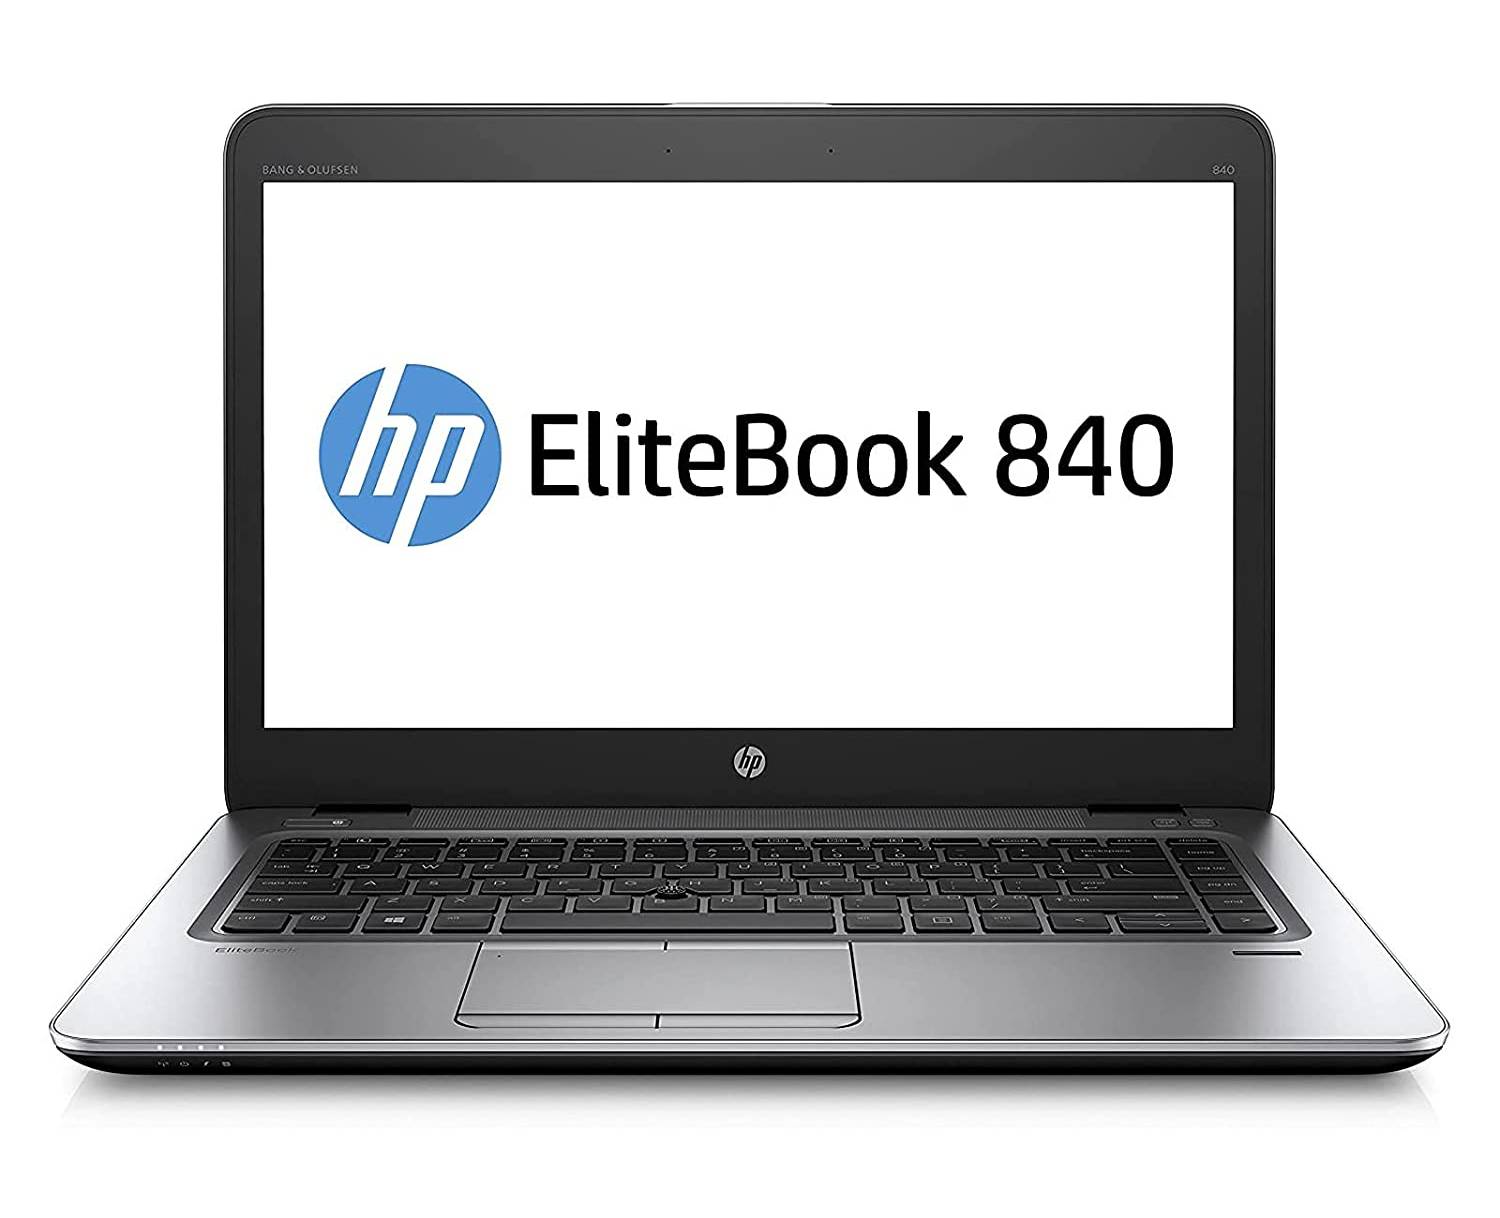 Ntb HP EliteBook 840 G3 i5-6300U, 16GB DDR4, 128GB, 14", Full HD AntiGlare, bez mechaniky / stříbrná / ZÁNOVNÍ